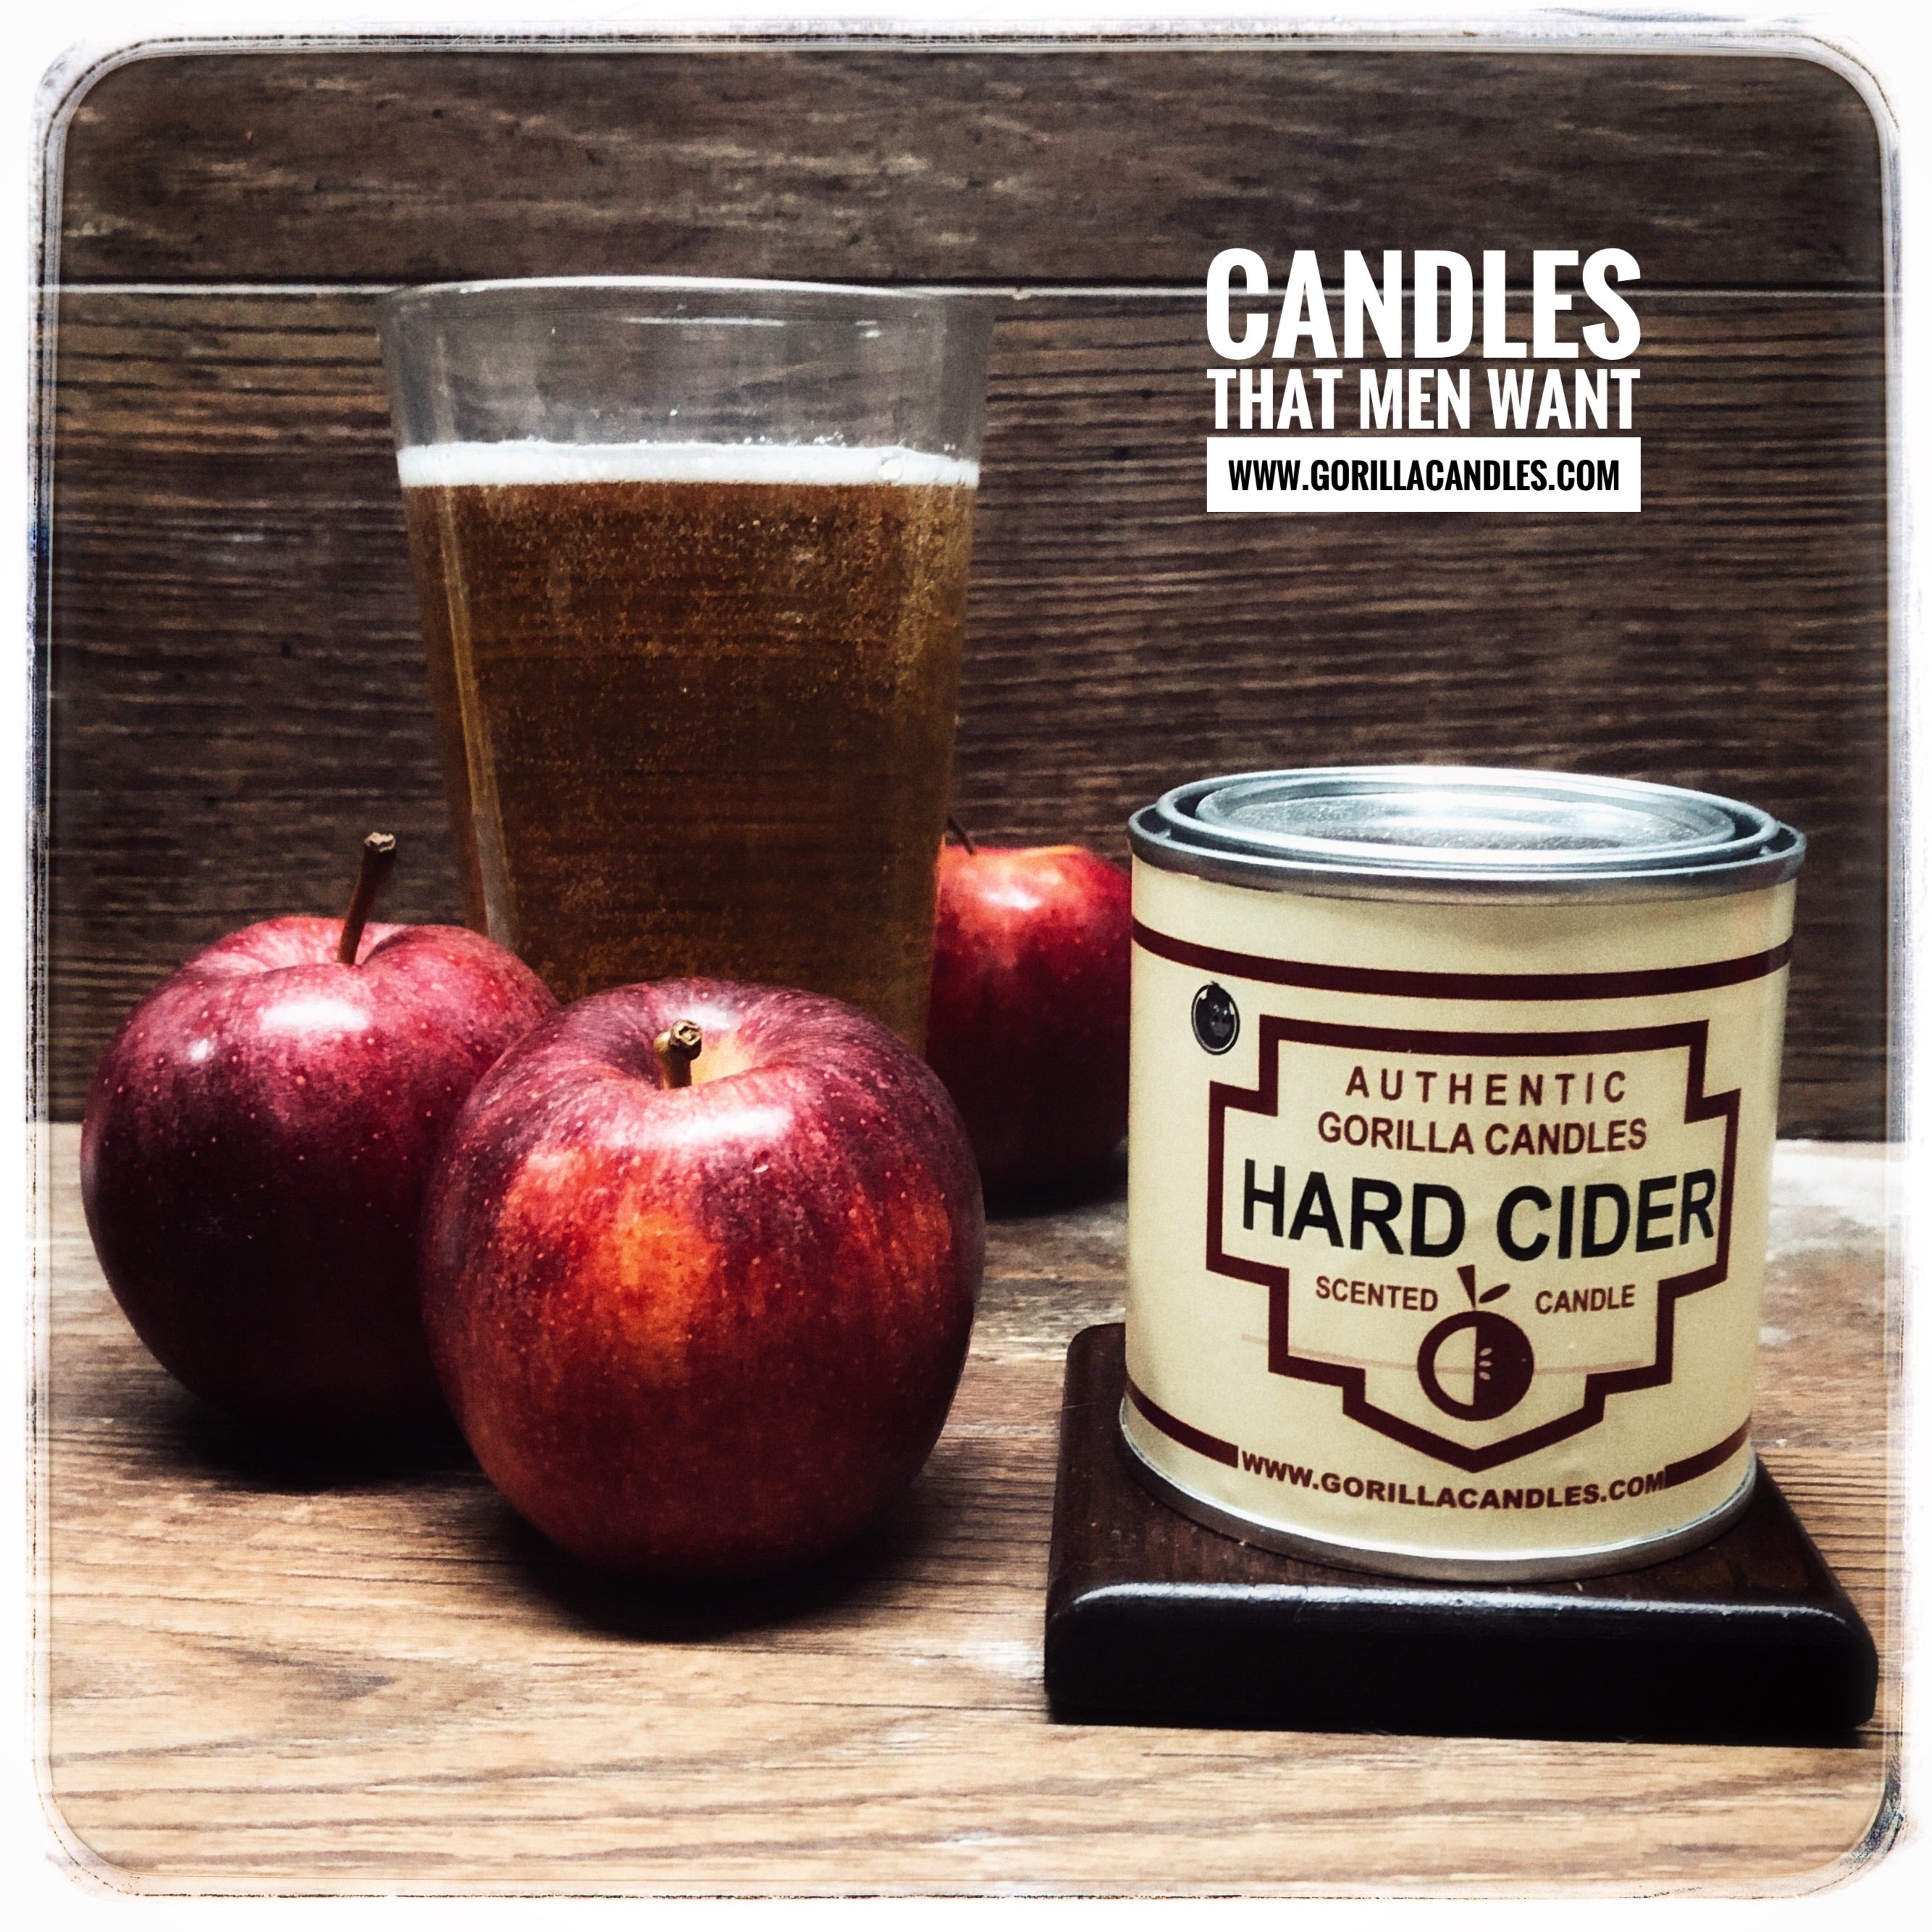 Hard Cider by Gorilla Candles™